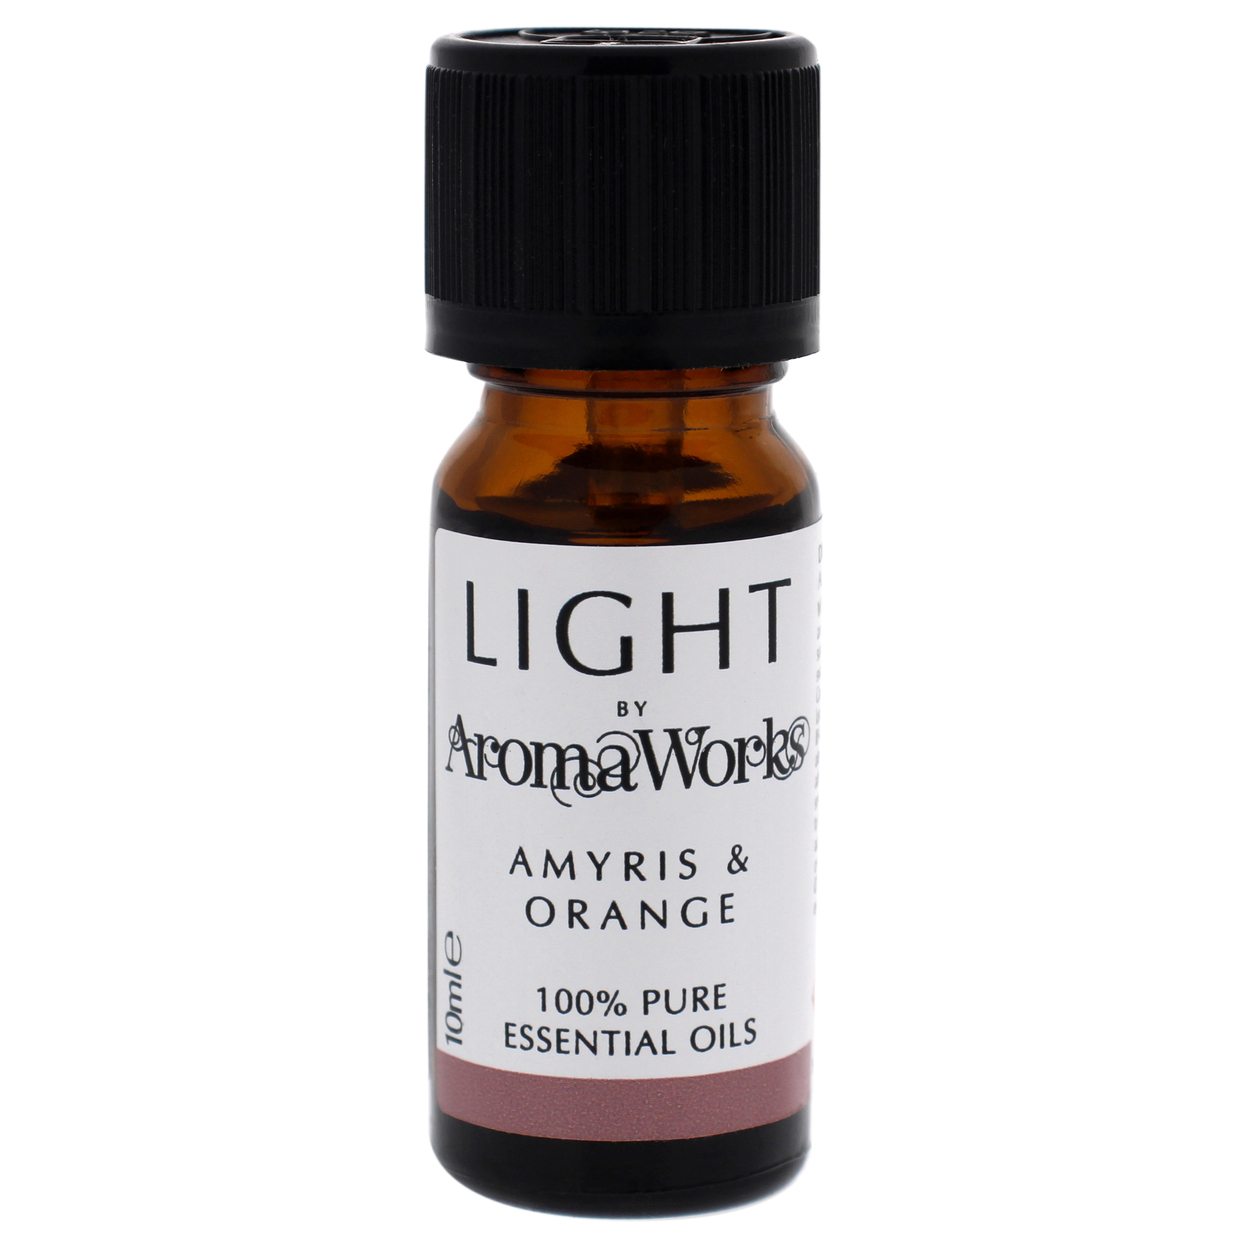 Aromaworks Light Essential Oil - Amyris And Orange 0.33 Oz